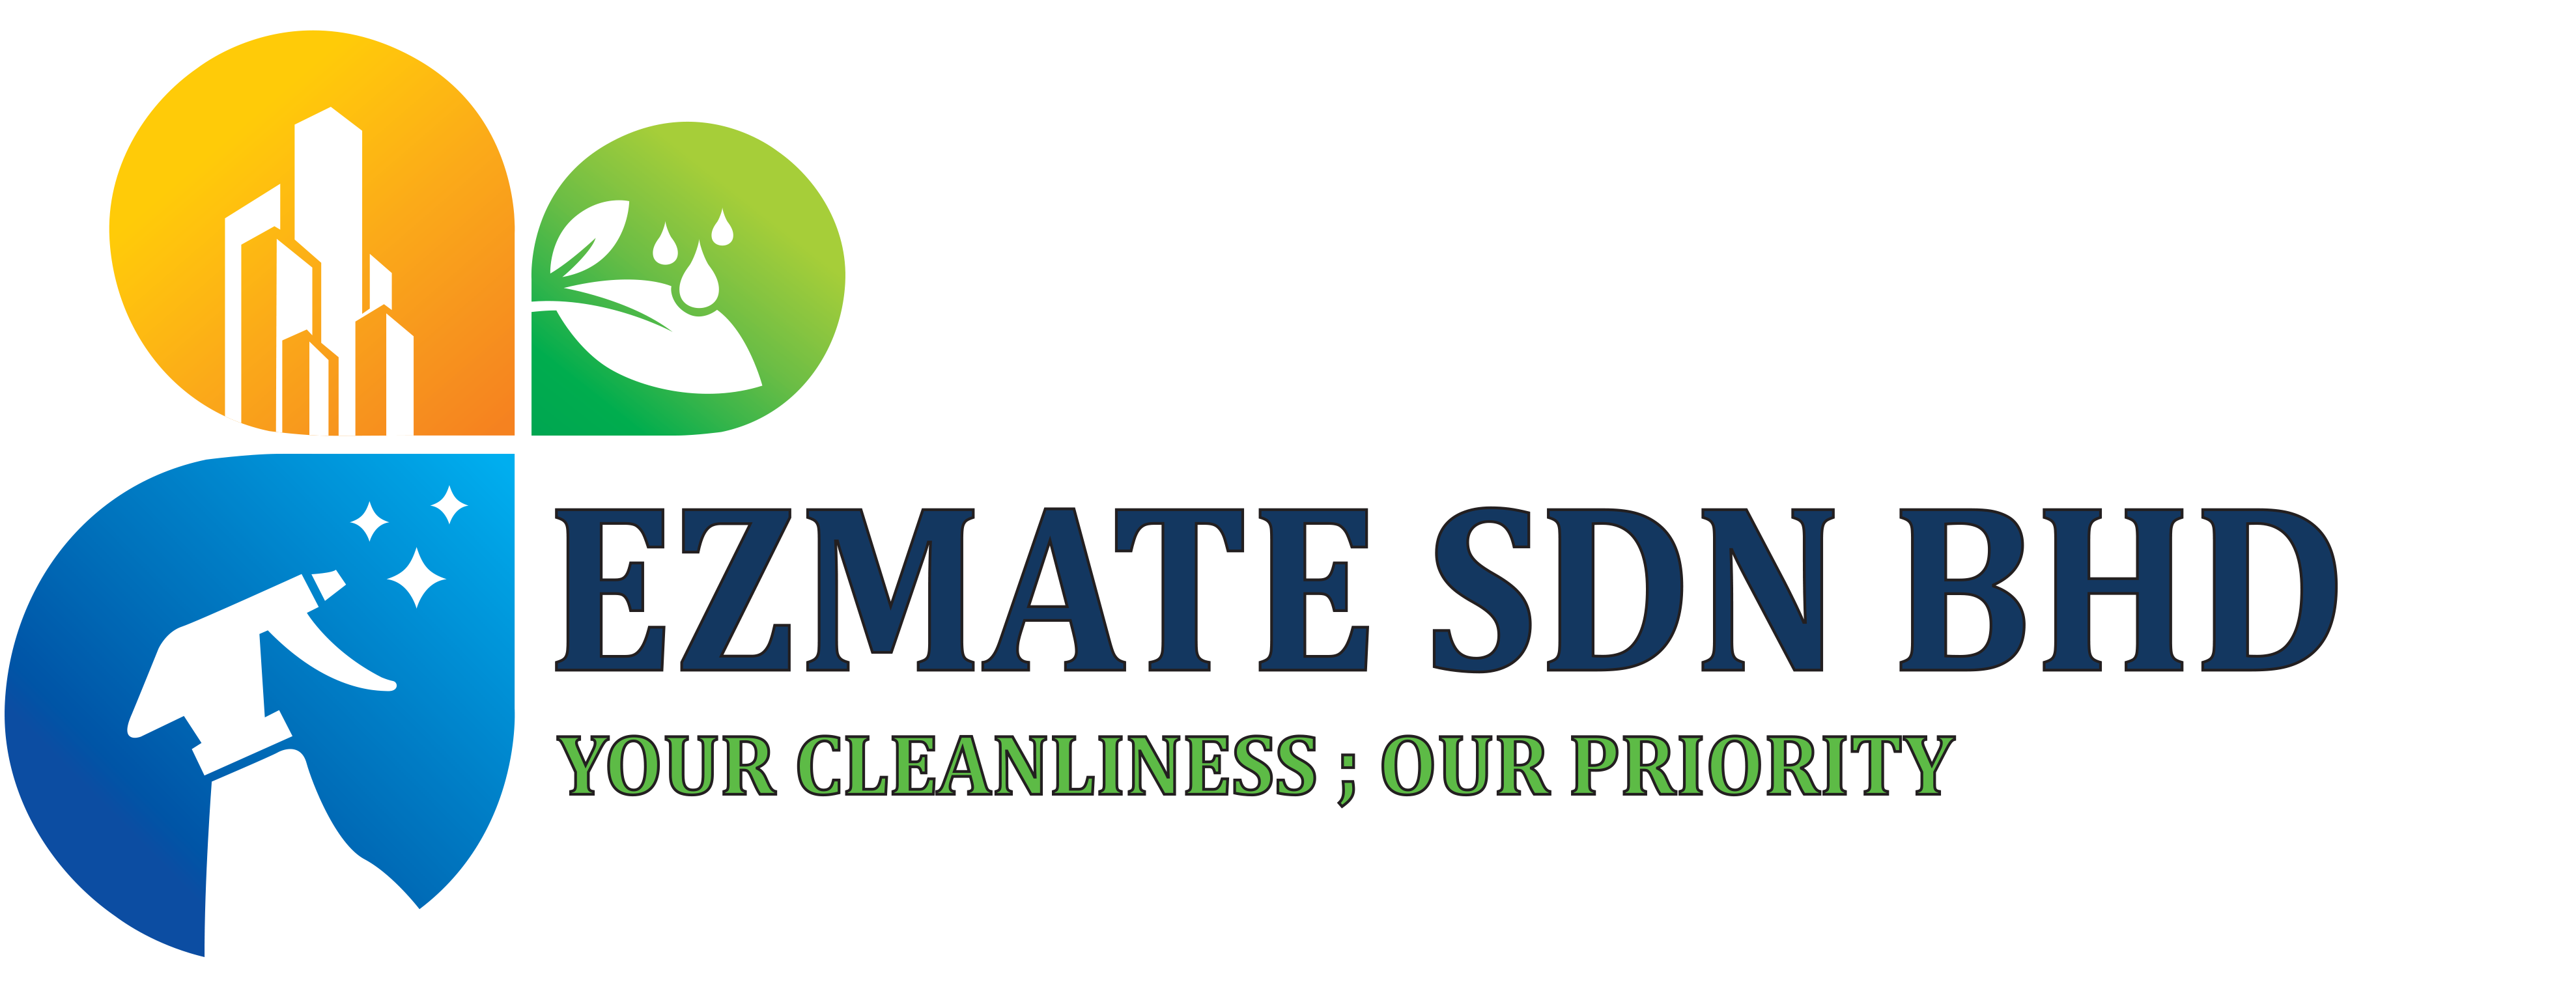 EZMATE SDN BHD Logo